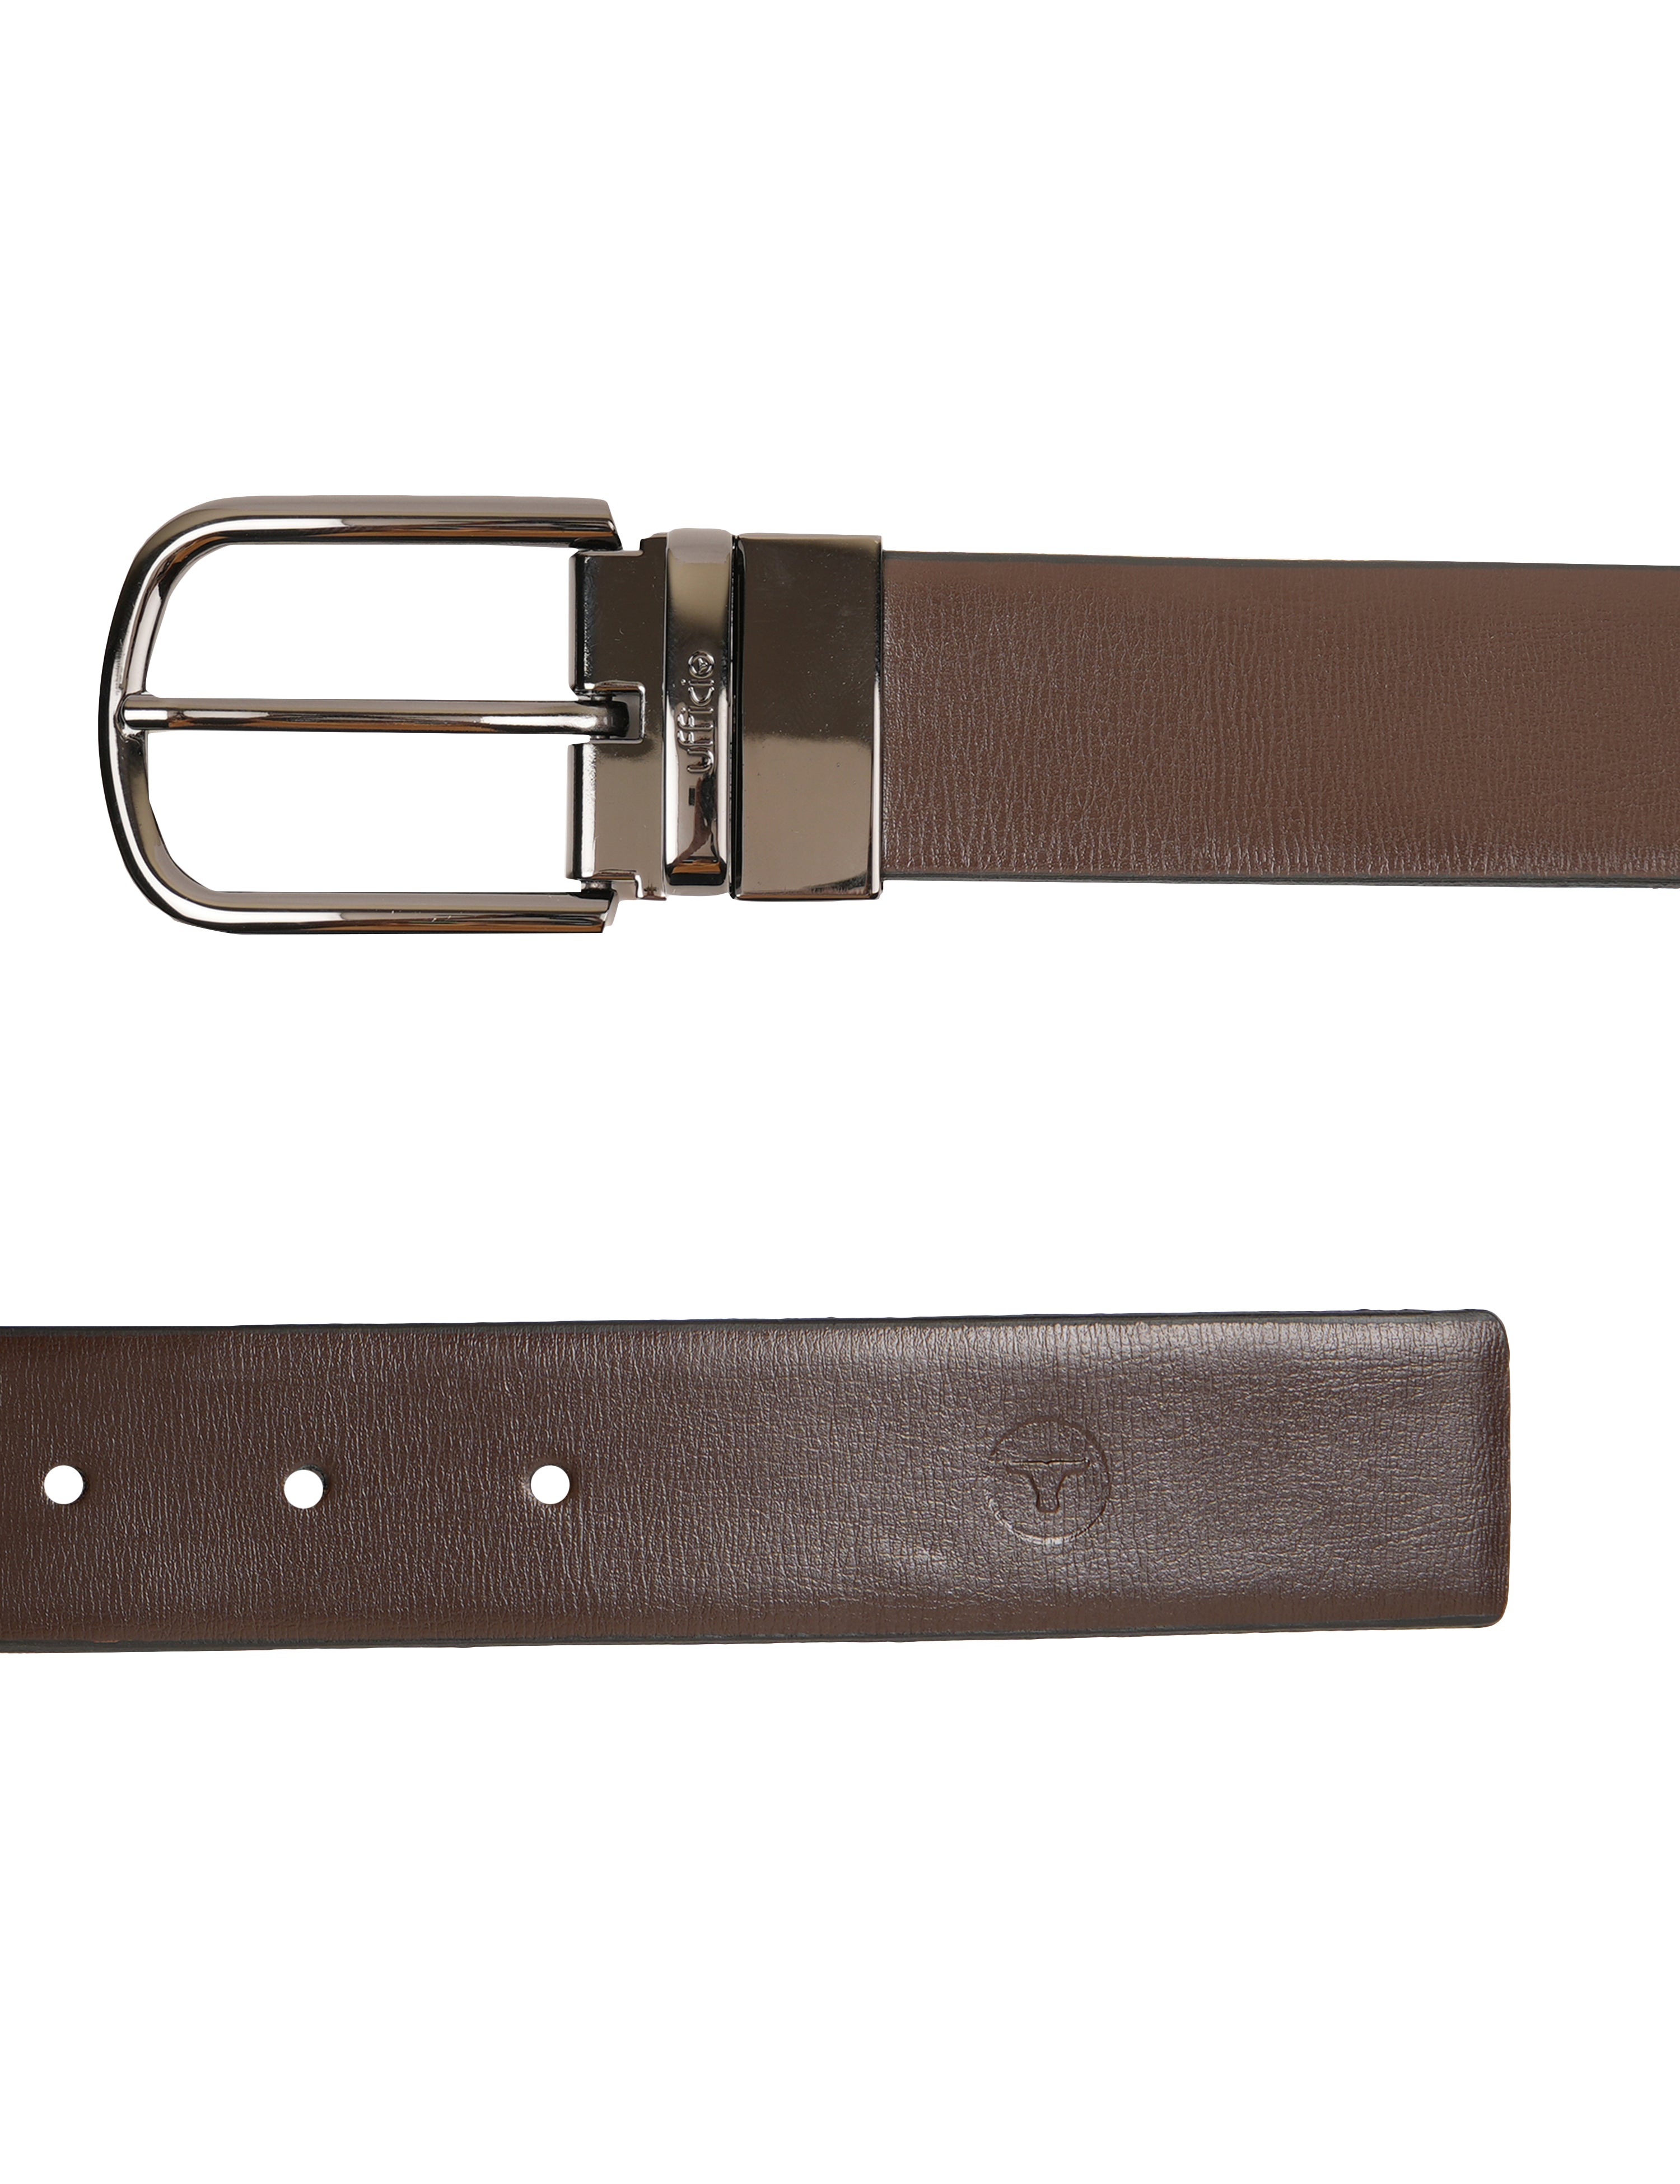 Ufficio Black and Brown Textured prong reversible belt (UFF2304B)